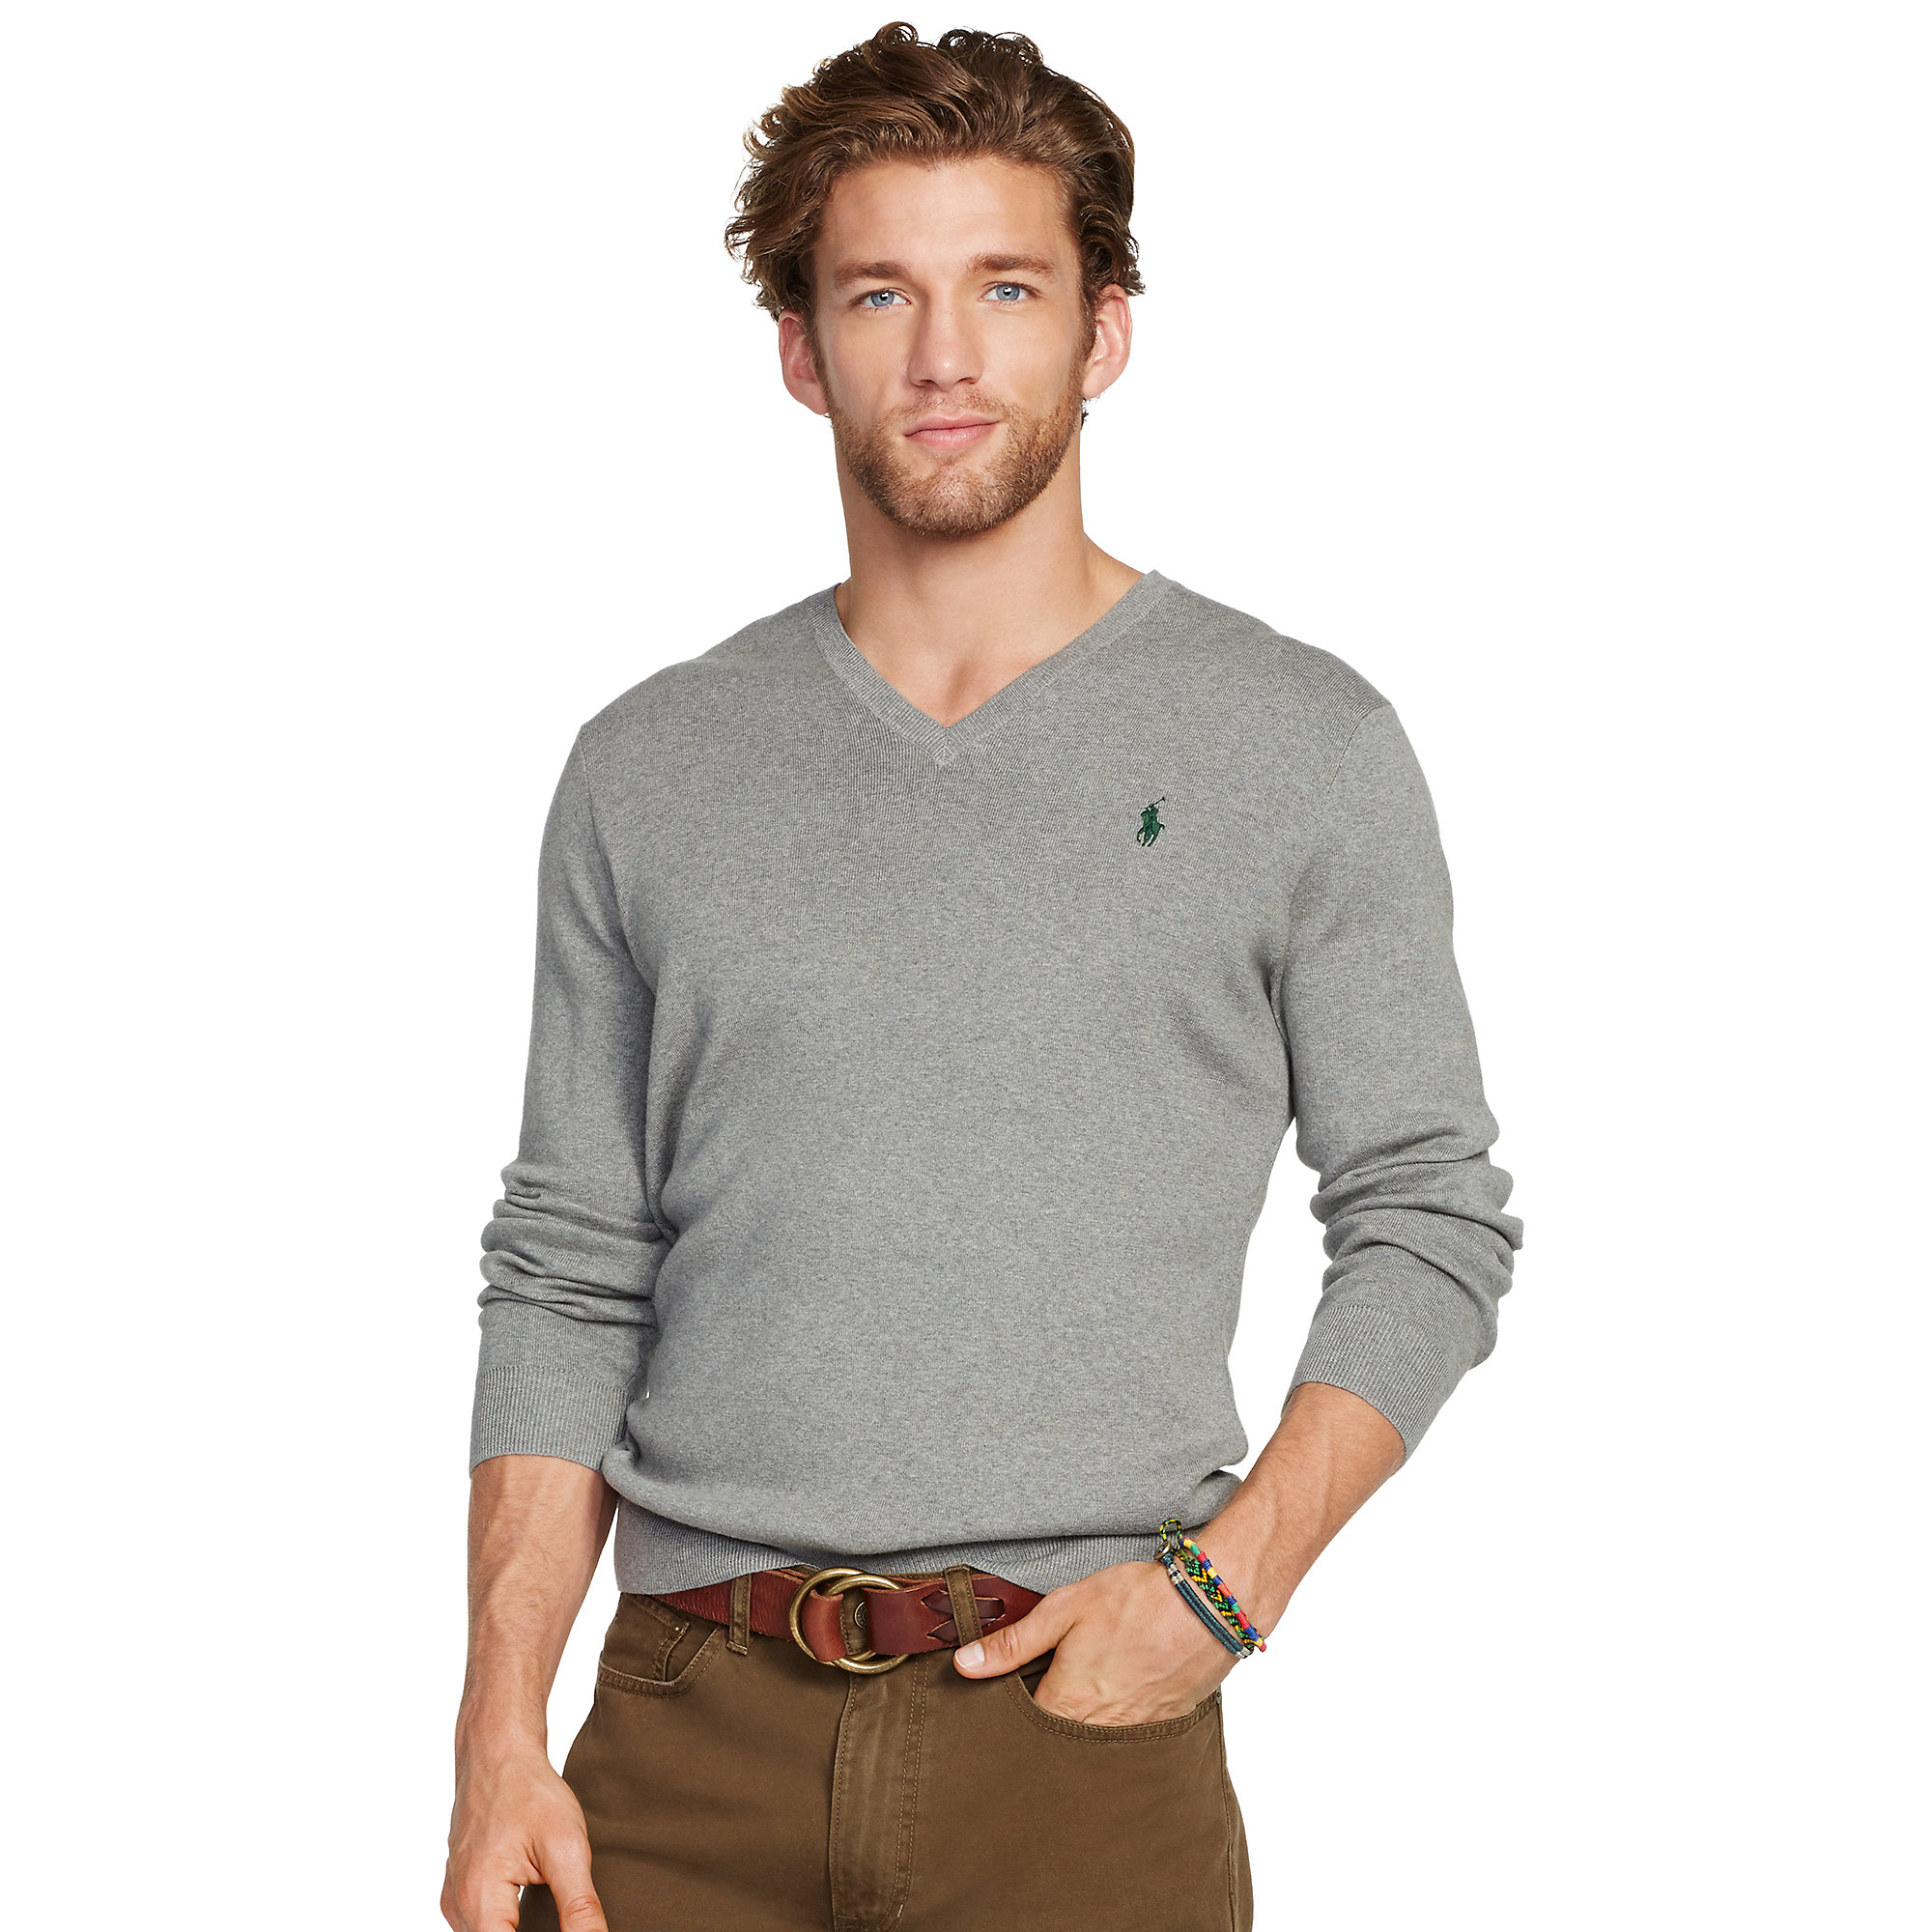 Polo Ralph Lauren Pima Cotton V-neck Sweater in Gray for Men - Lyst